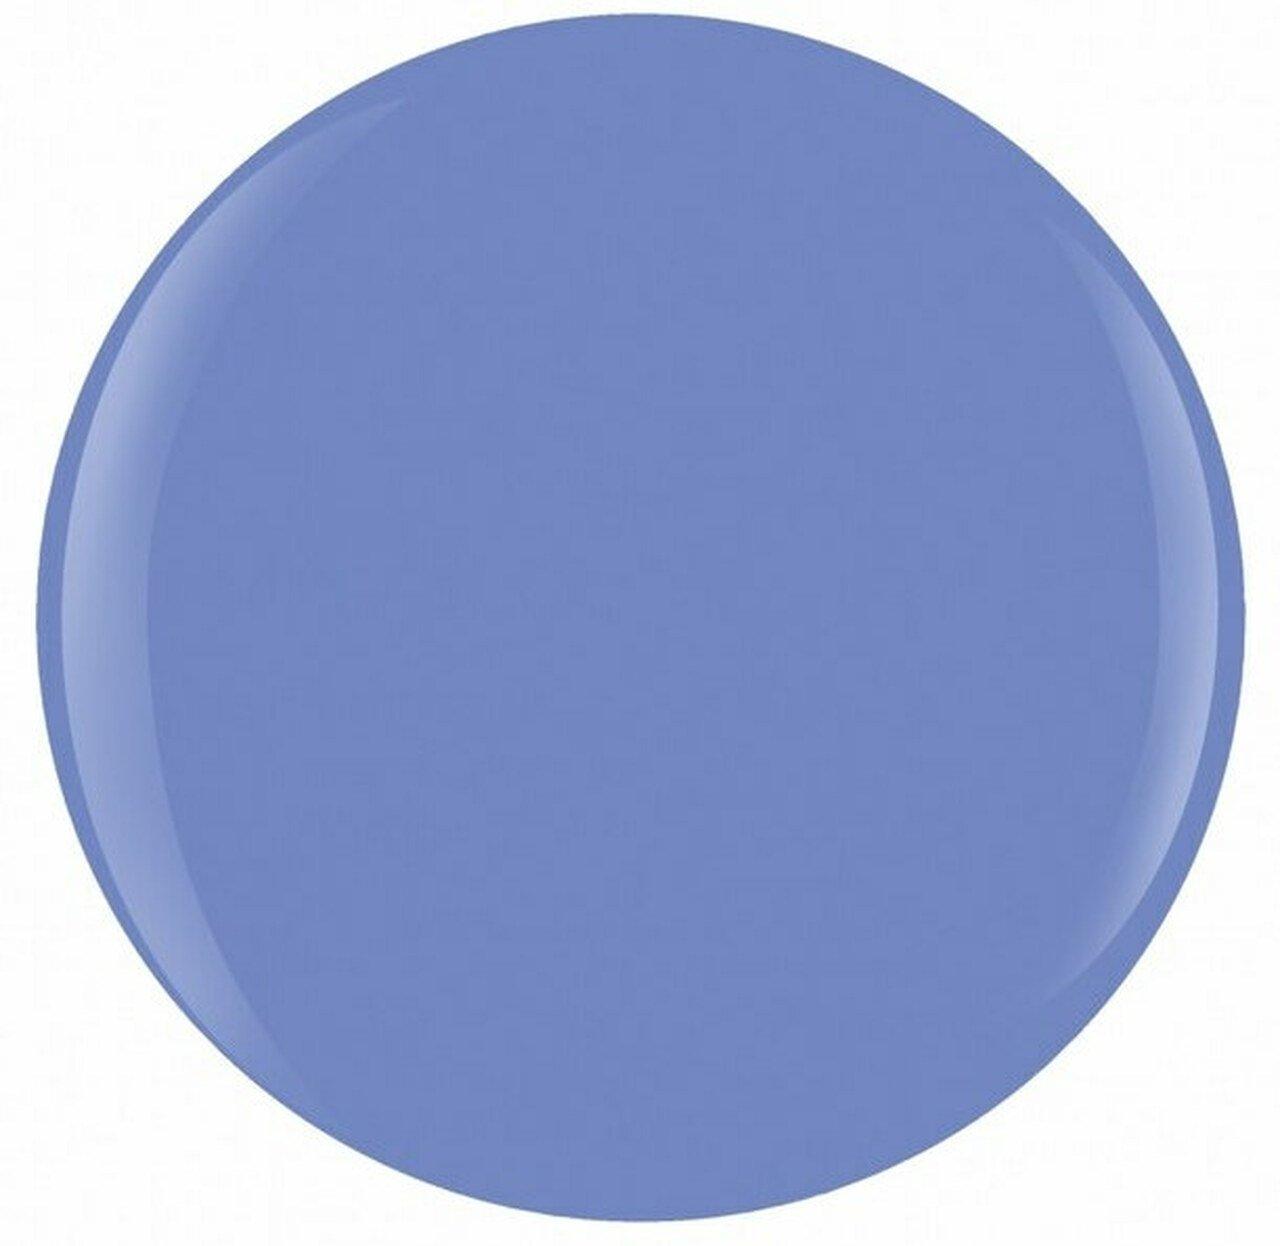 Gelish - Blue-Eyed Beauty 0.5oz - Sanida Beauty